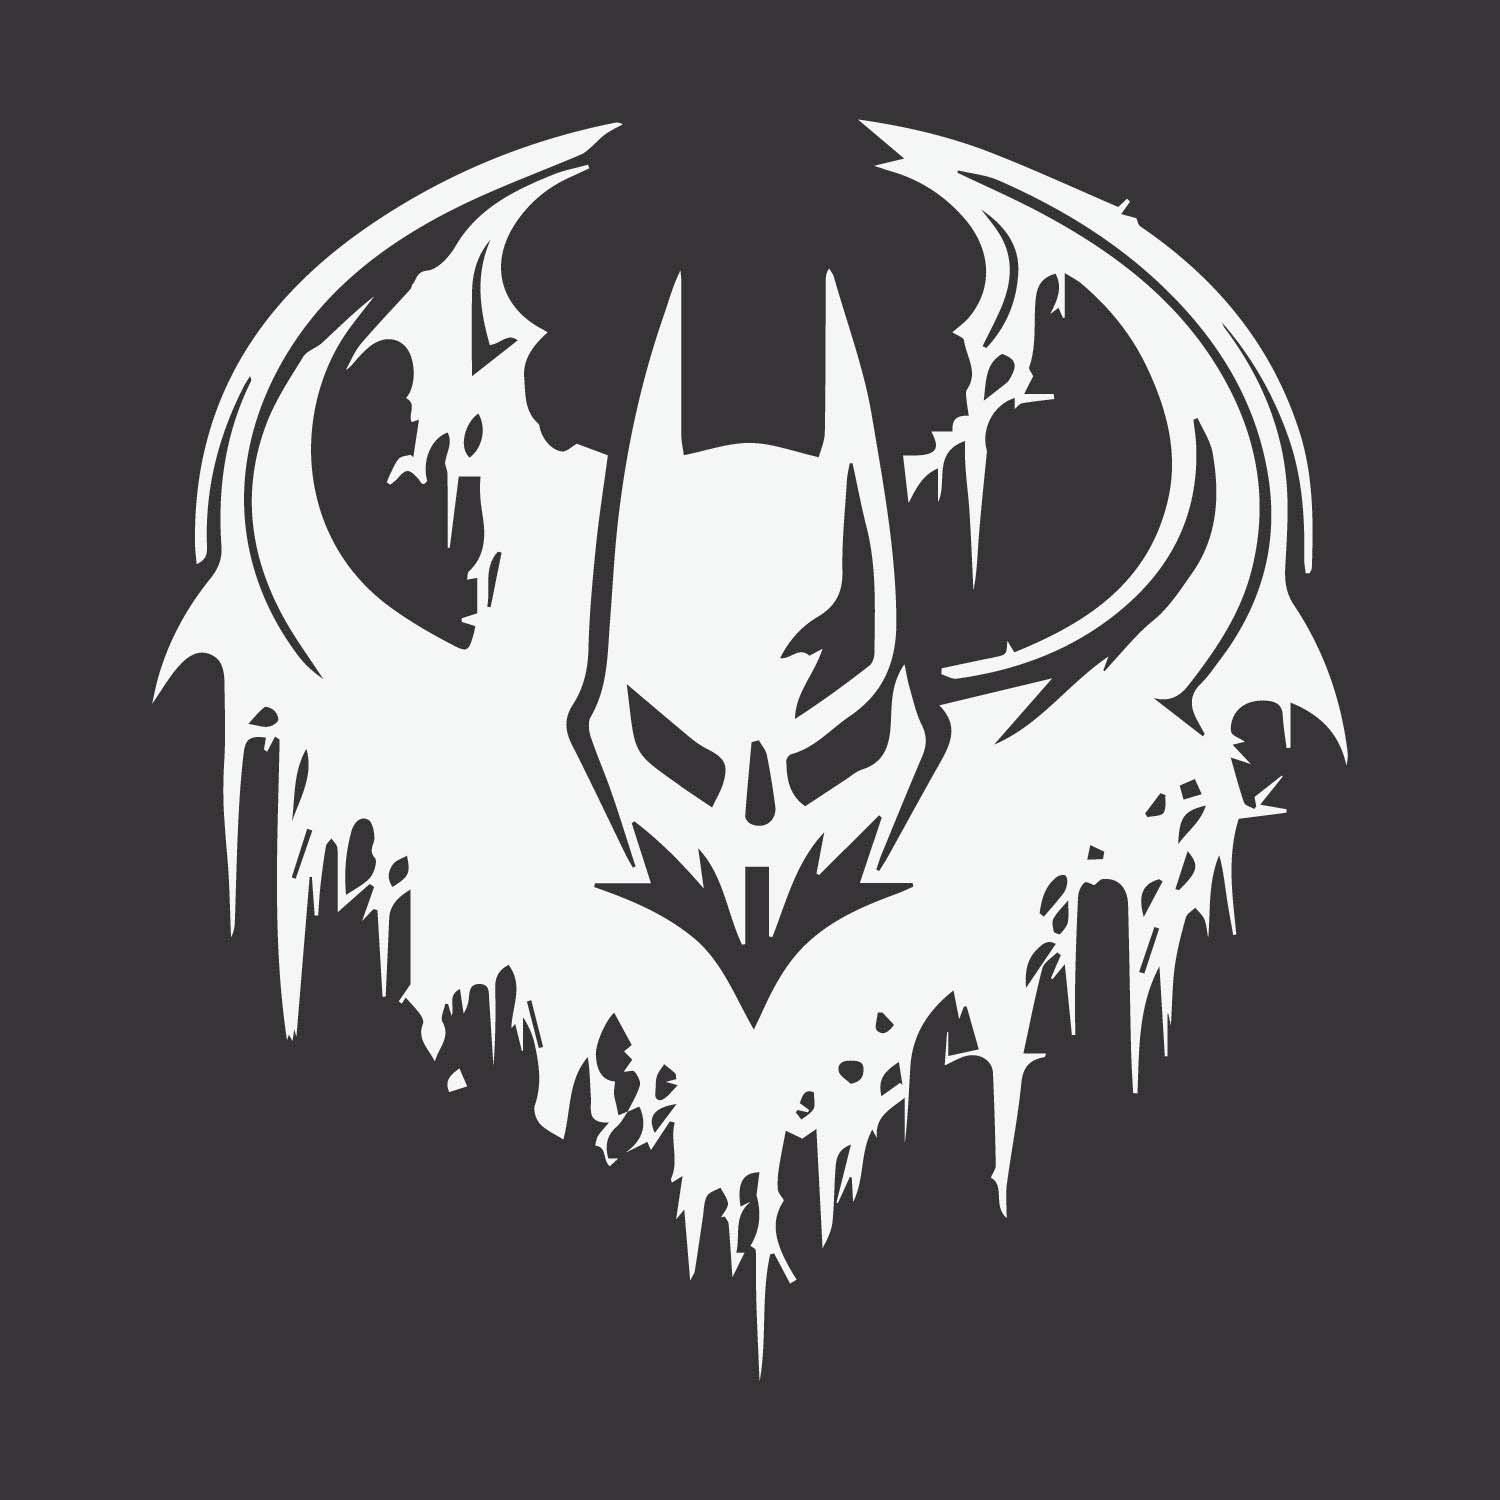 4 BatMan logo design/T-shirt design preview image.